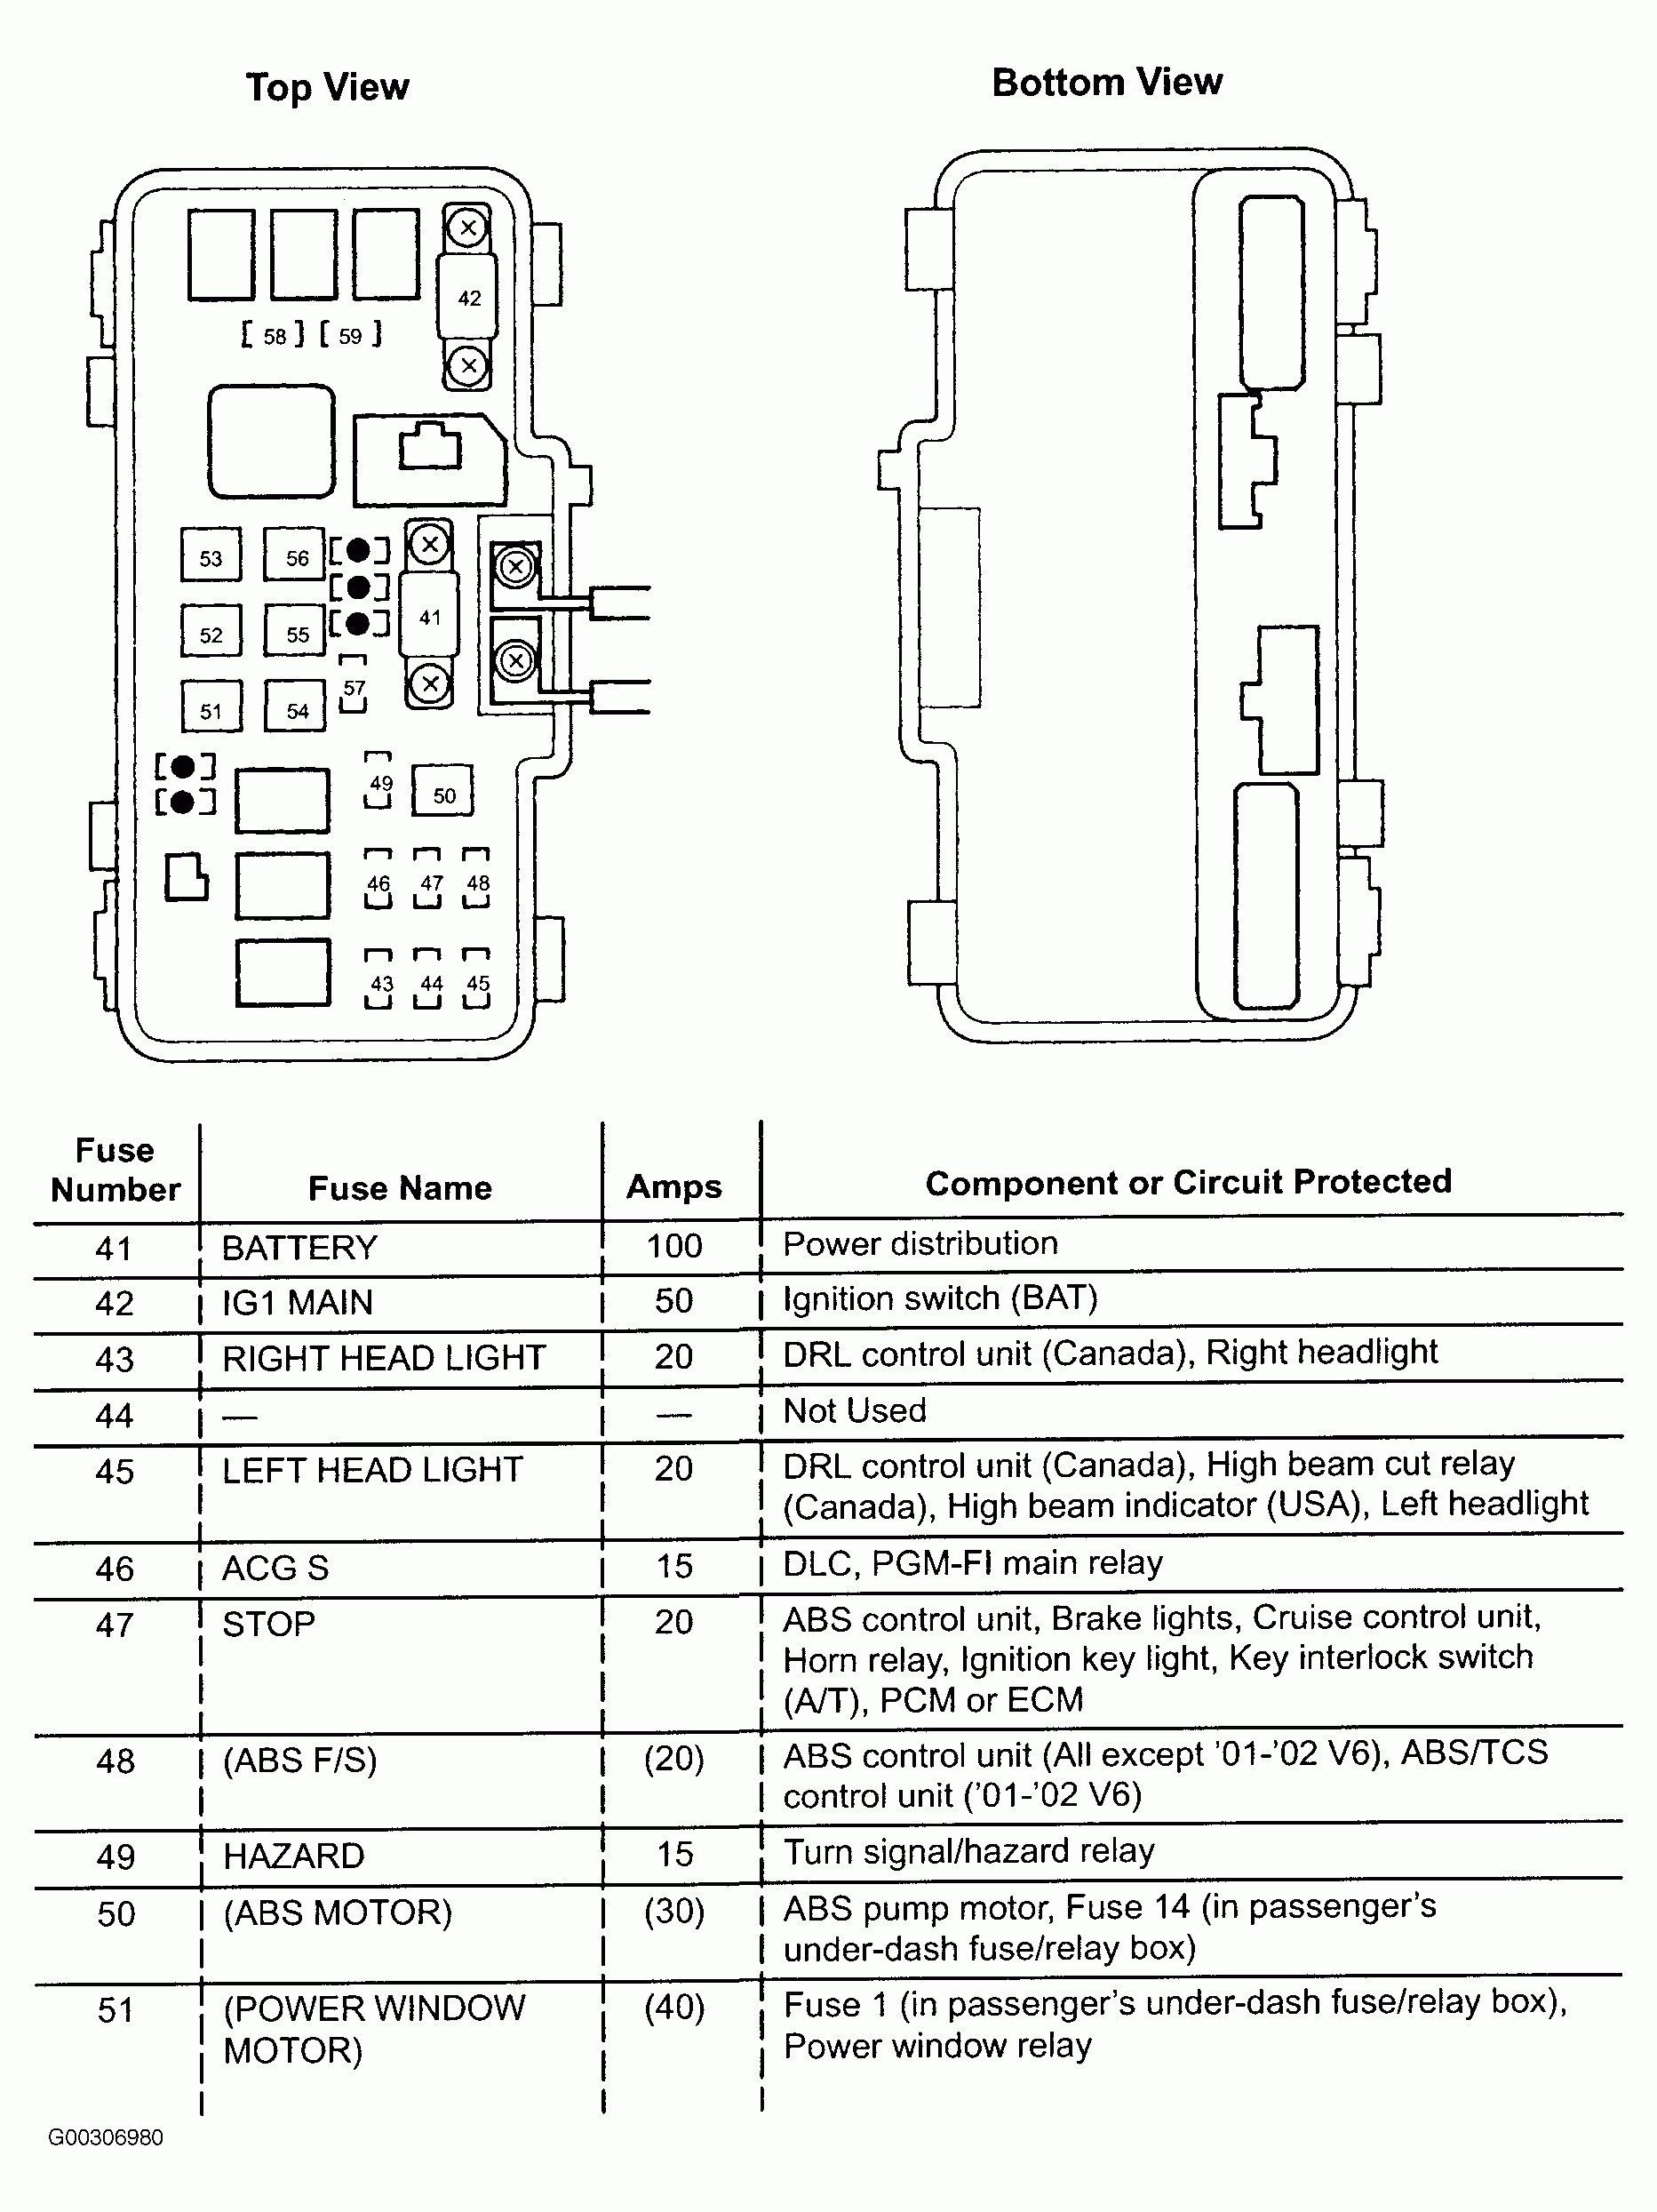 Honda 160cc Engine Diagram 2003 Honda Odyssey Fuse Box Diagram Wiring Diagram Paper Of Honda 160cc Engine Diagram